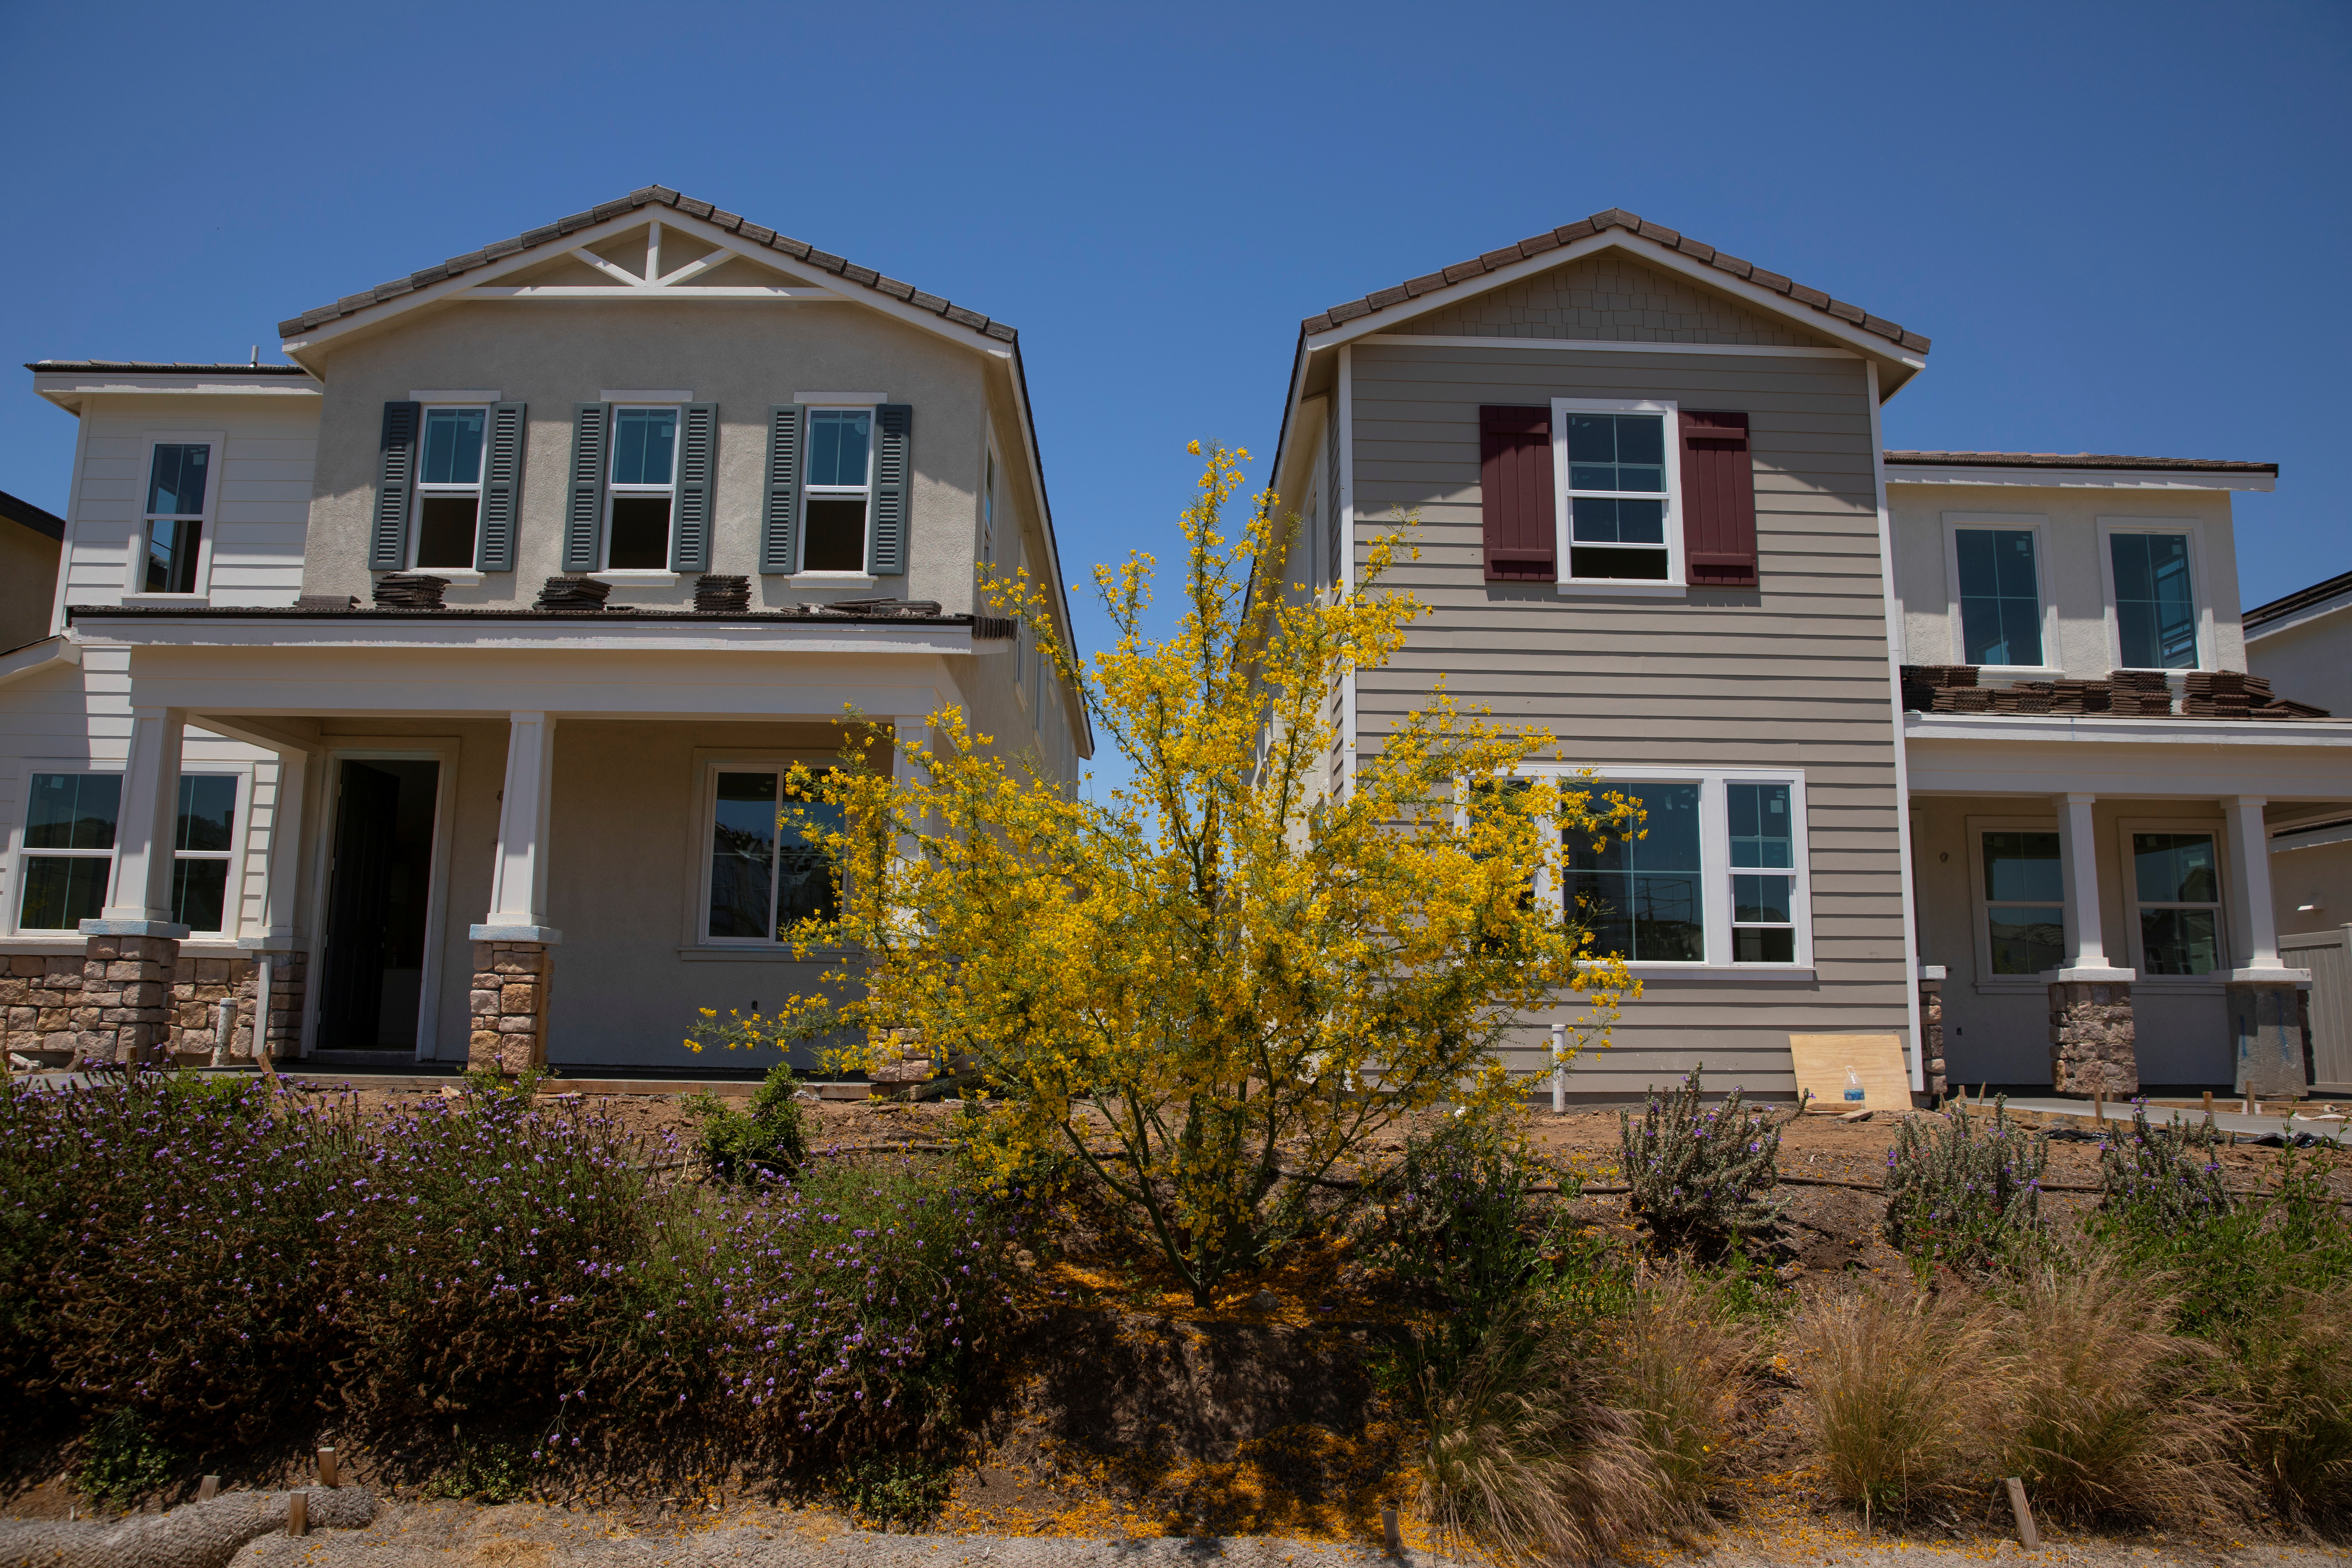 Residential home construction continues as California faces a housing shortage